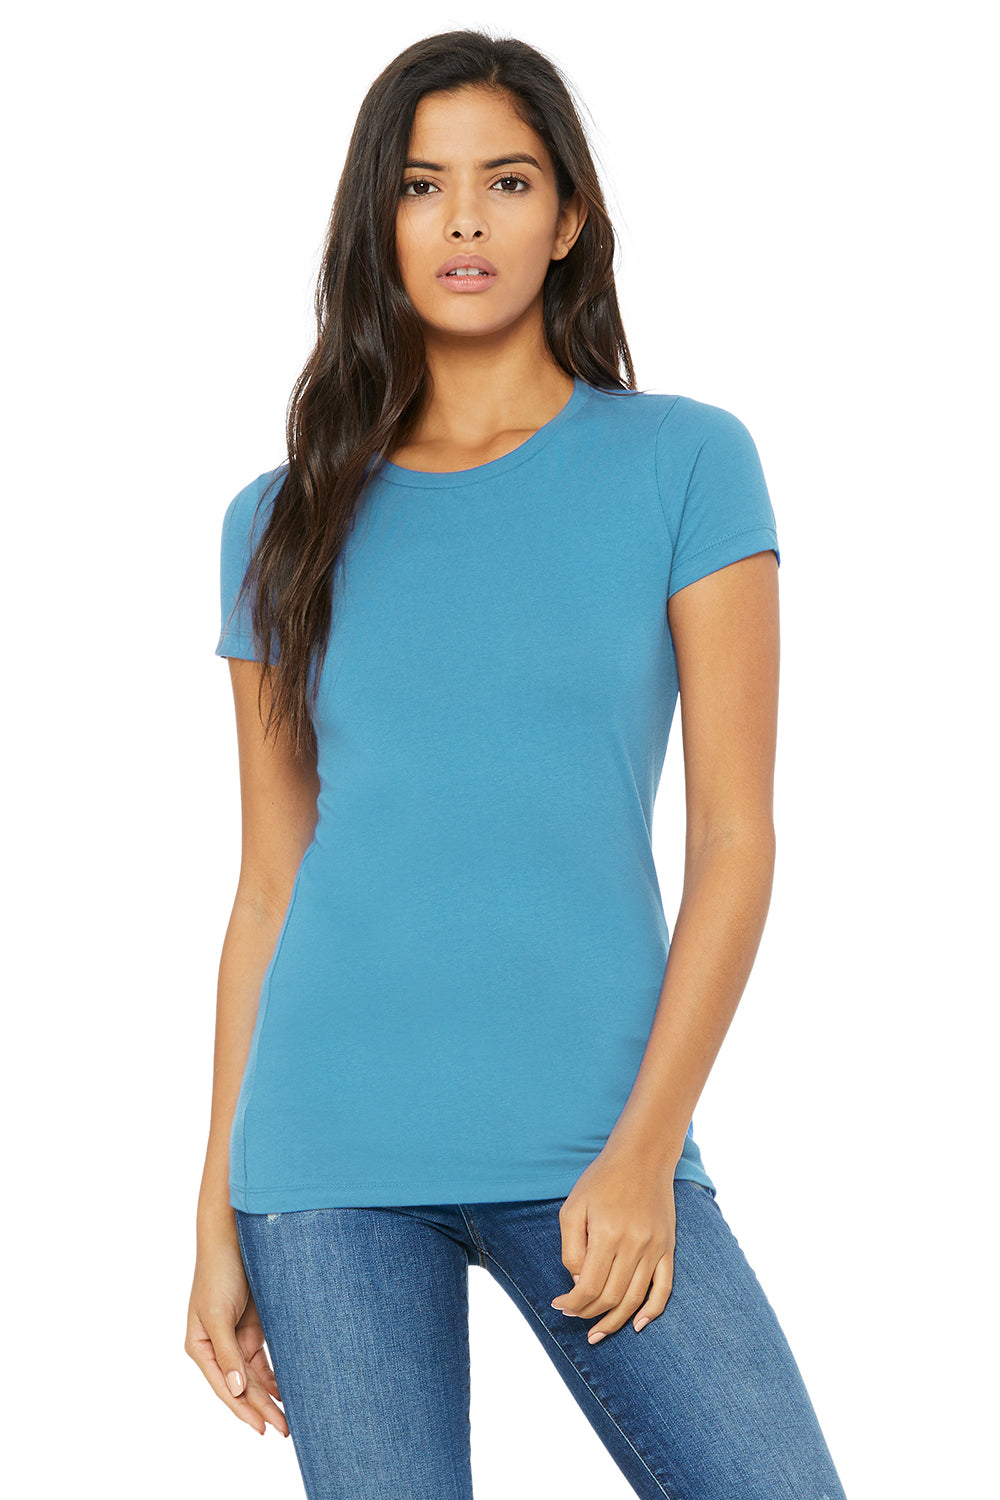 Bella + Canvas 6004 Womens The Favorite Short Sleeve Crewneck T-Shirt Heather Aqua Blue Front